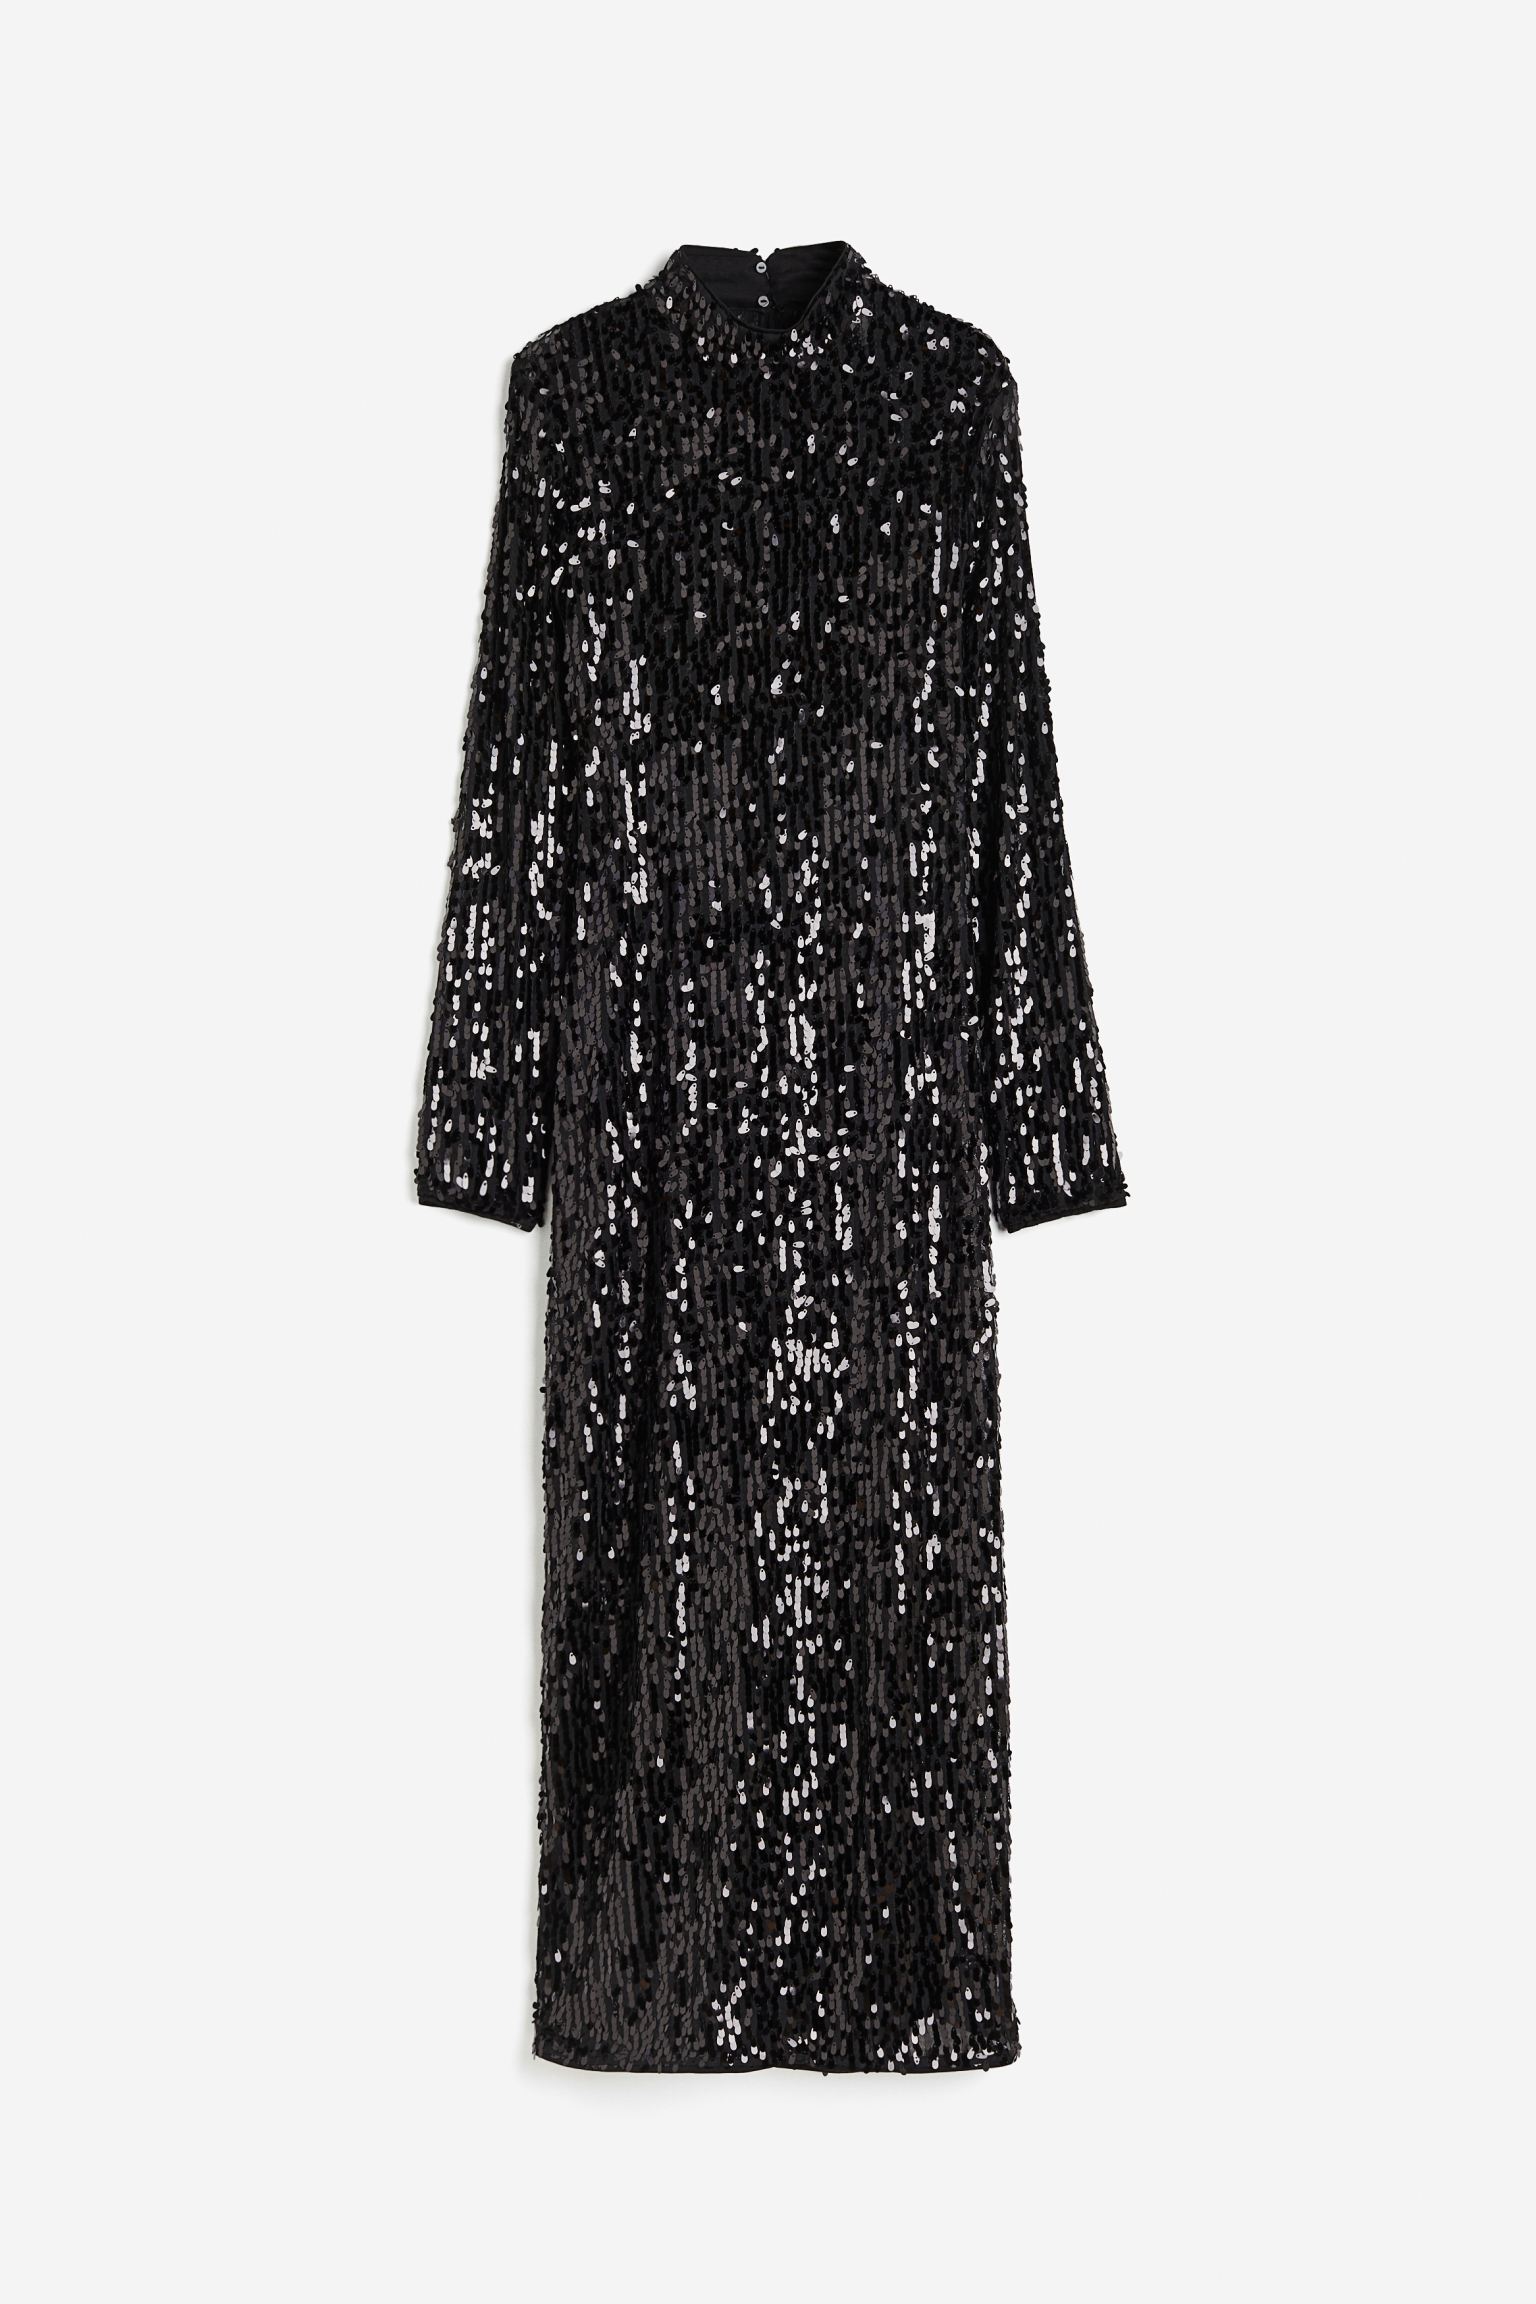 Vestido negro de lentejuelas de H&M (69,99 euros).